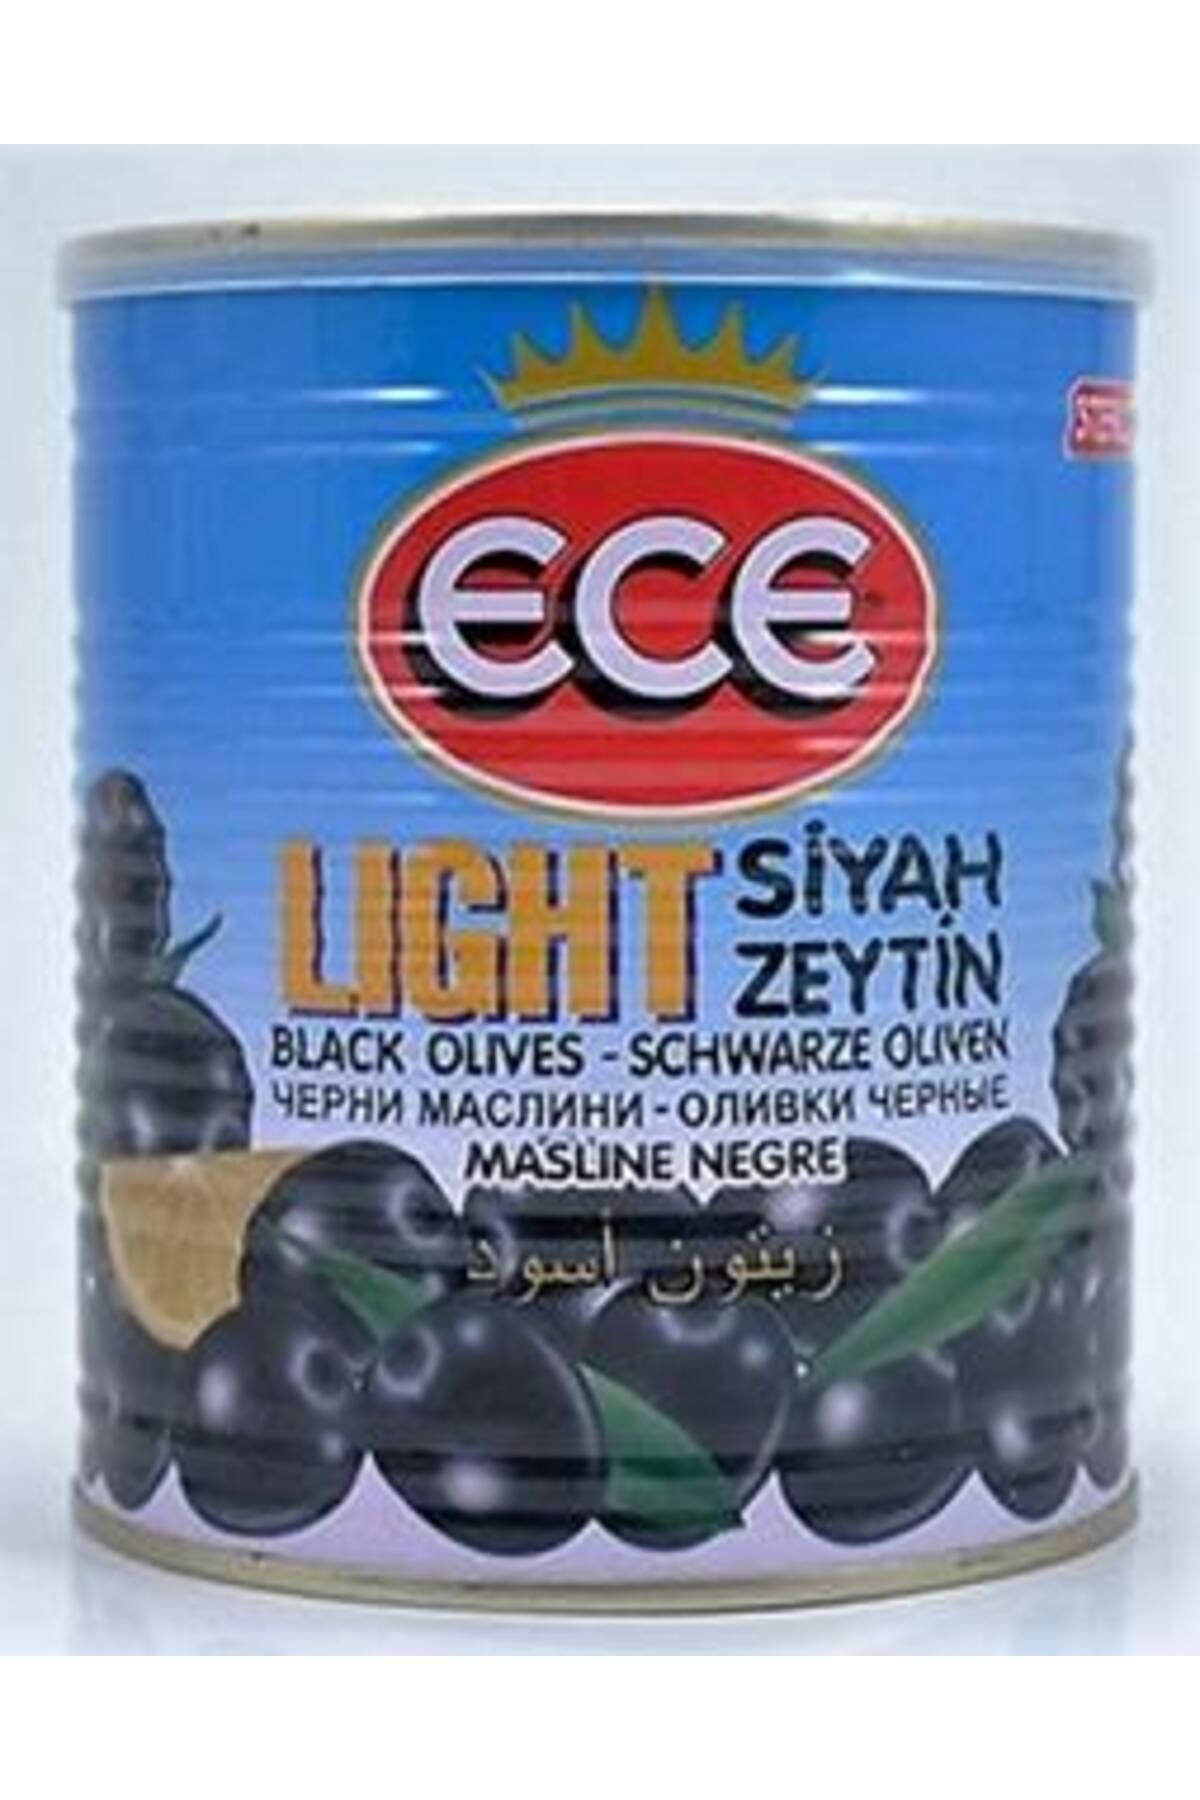 Ece Light Siyah Zeytin 400 Gr. Tnk. (2'Lİ)